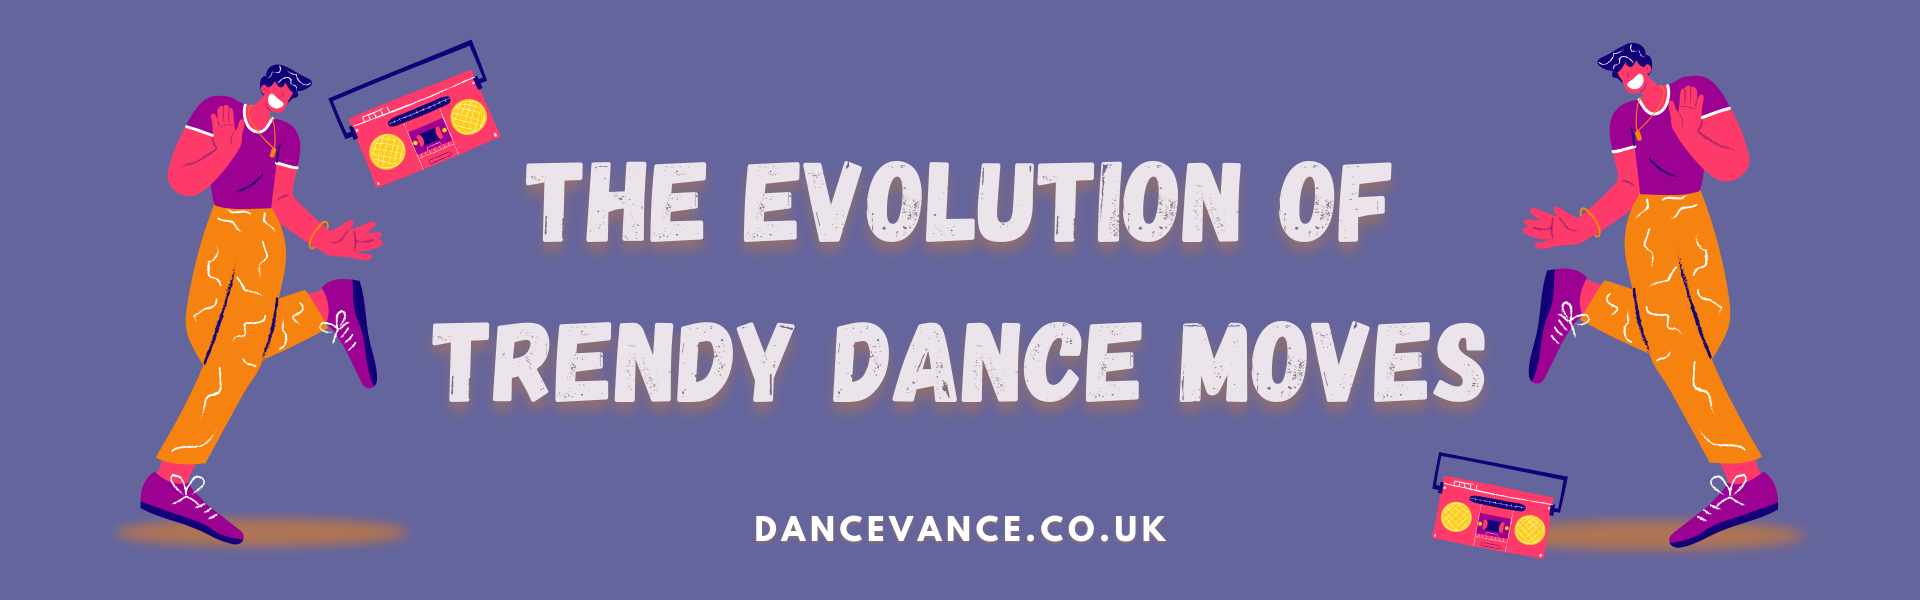 Dance Vance Blog